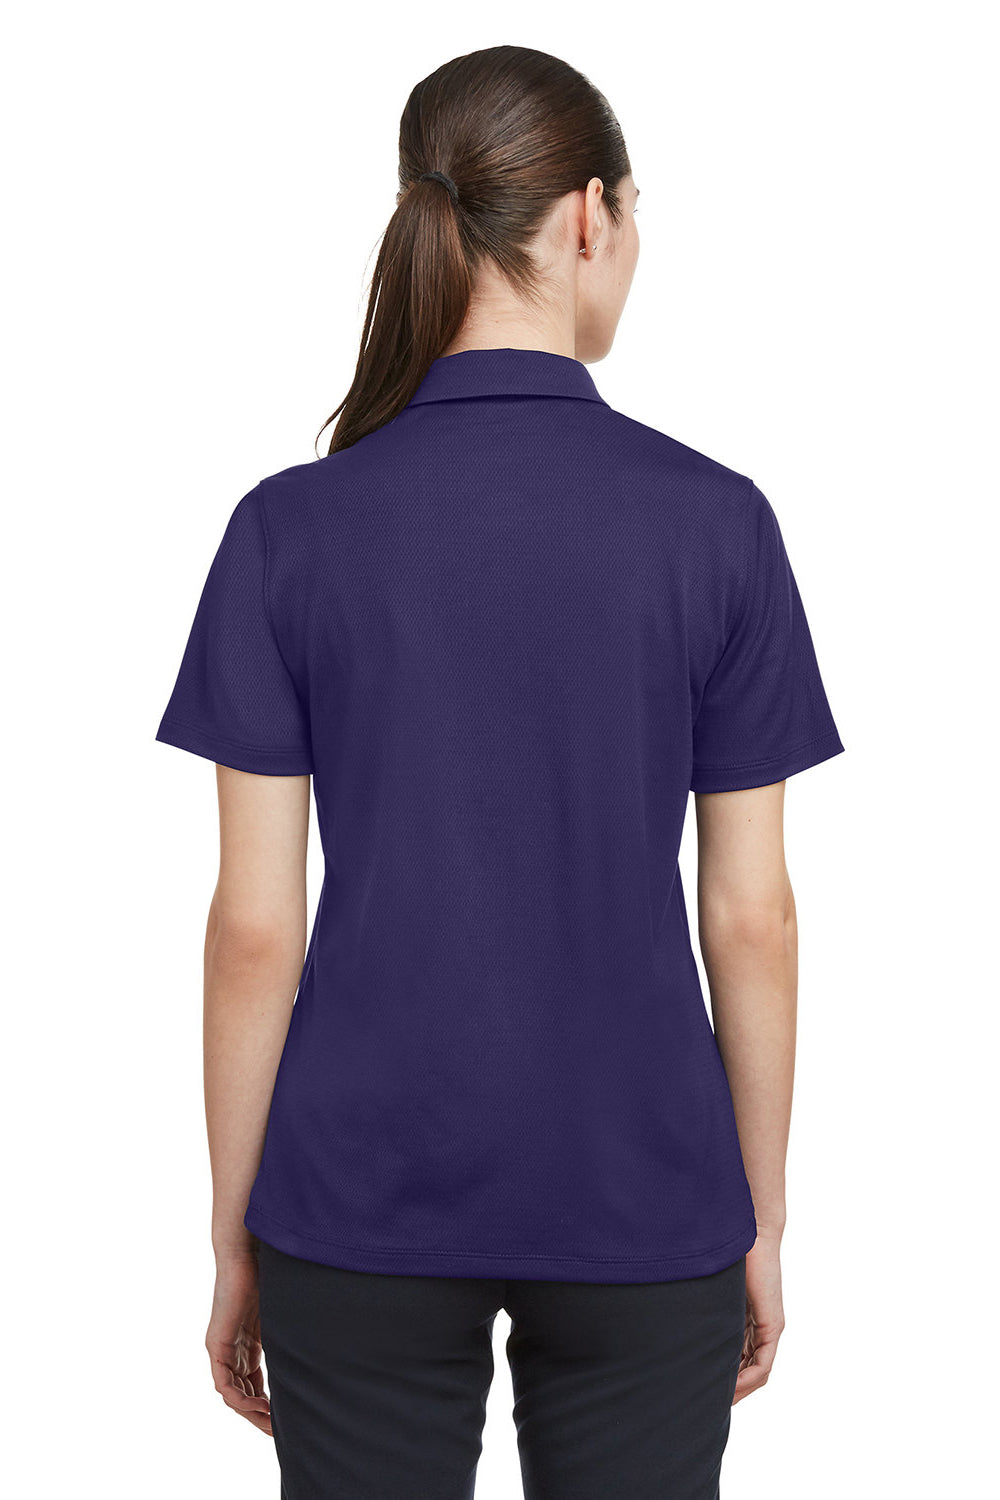 Under Armour 1370431 Womens Tech Moisture Wicking Short Sleeve Polo Shirt Purple Model Back